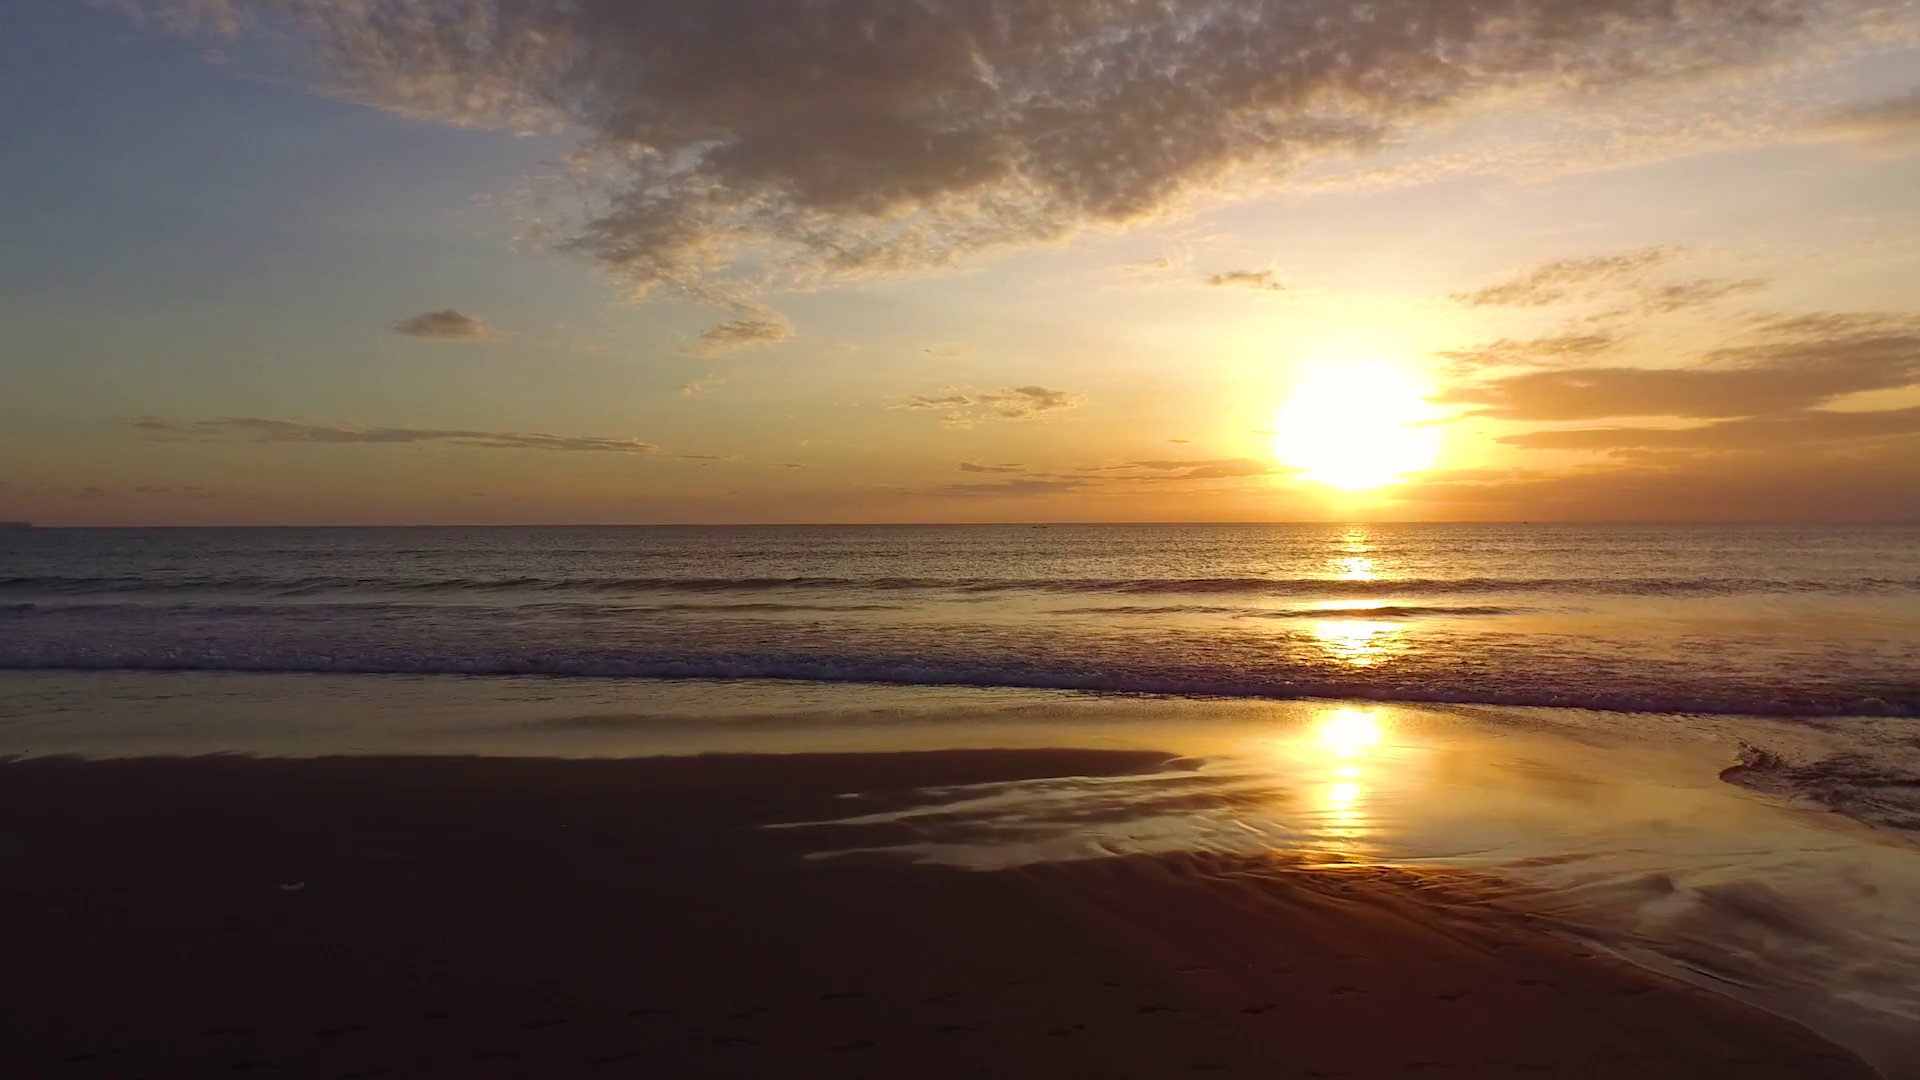 Gliding drone shot toward serene sunset over beach and ocean waves ...